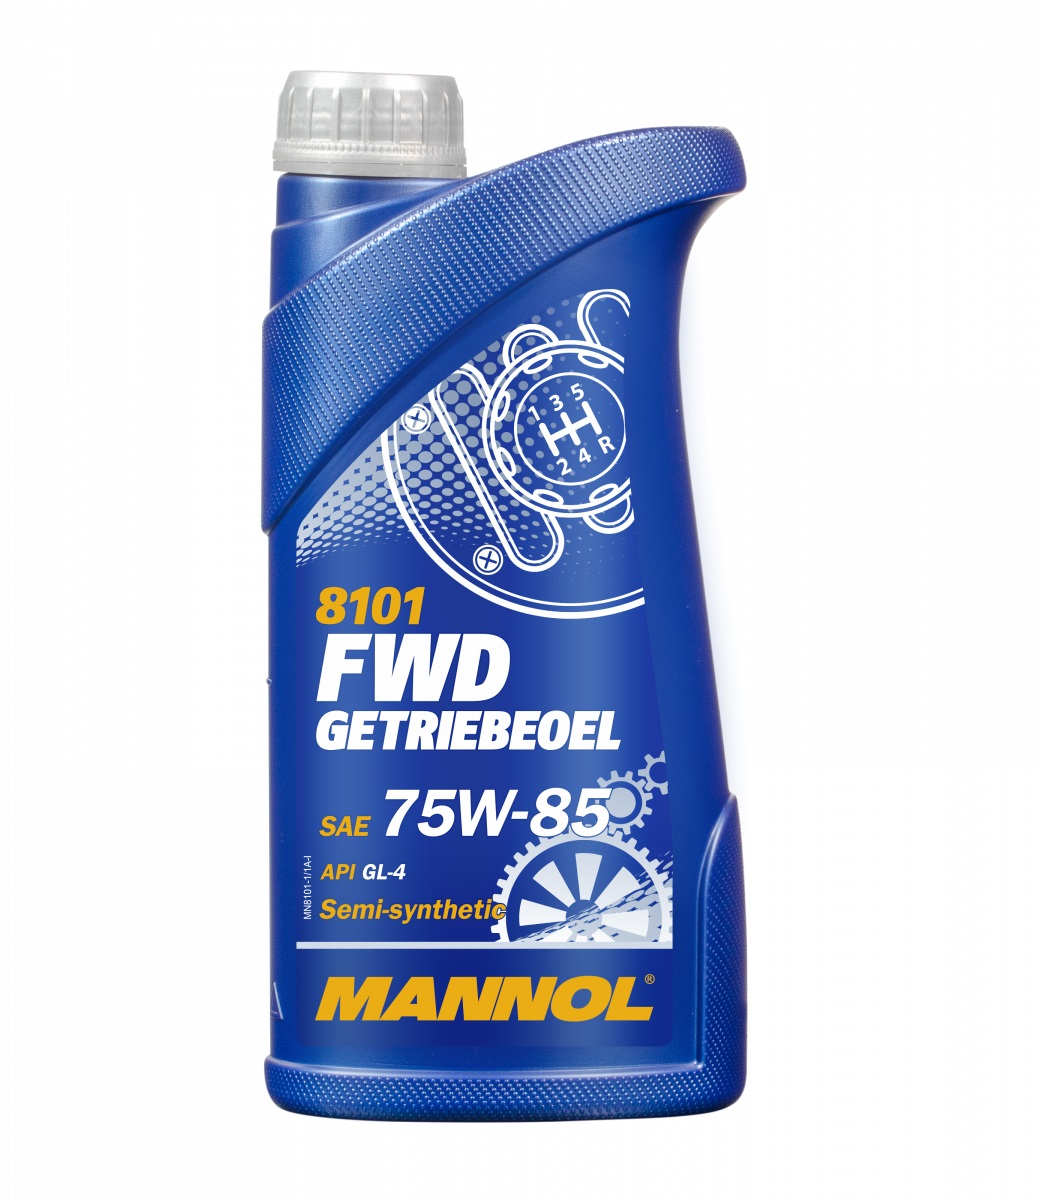 Трансмиссионное масло MANNOL FWD Getriebeoel 75w-85 GL-4 1л полусинт. MN8101-1 от магазина А-маркет